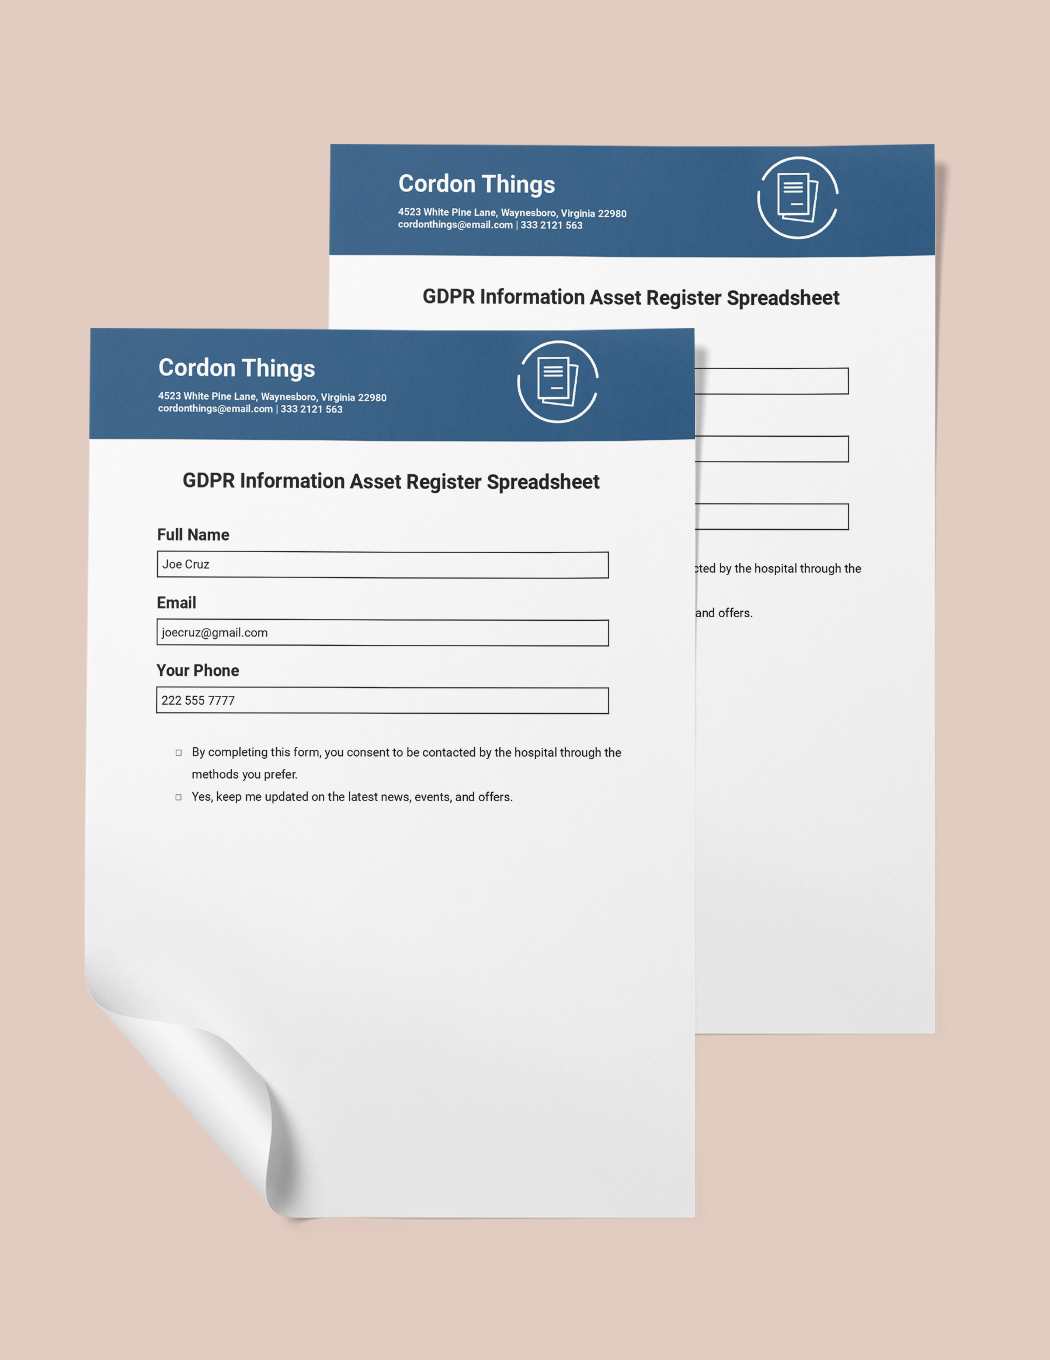 GDPR Information Asset Register Spreadsheet